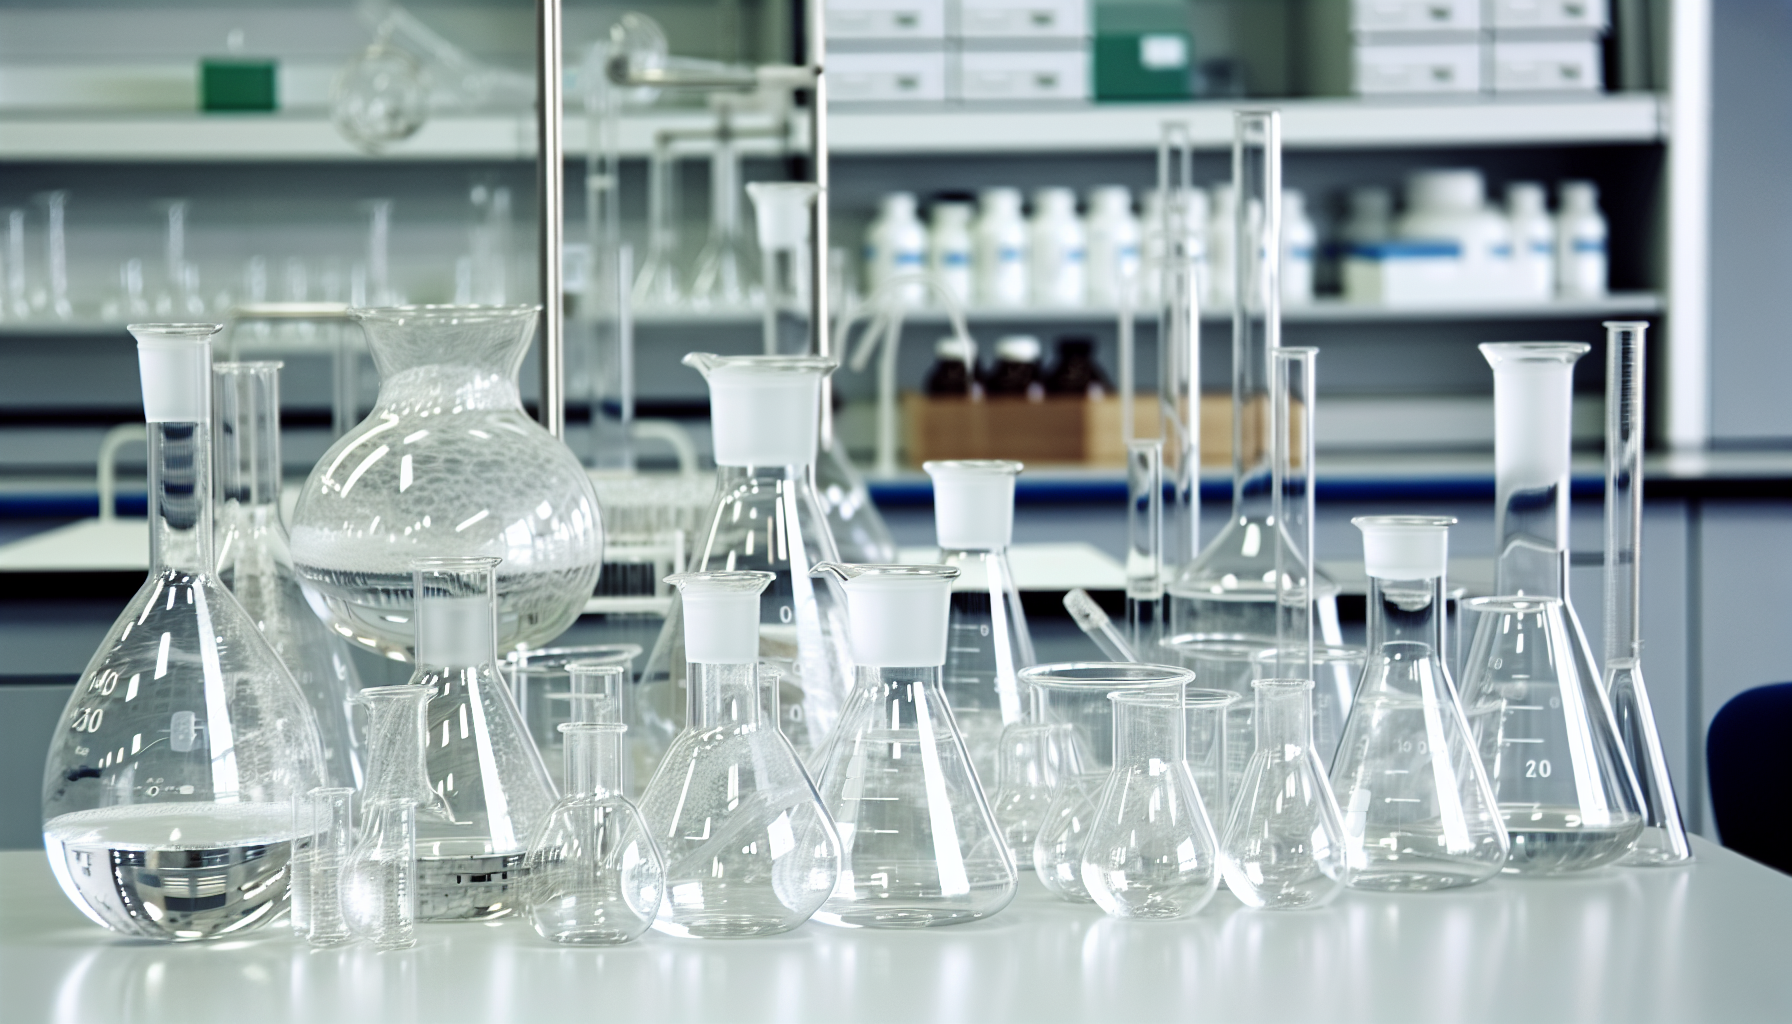 Various chemistry glassware types